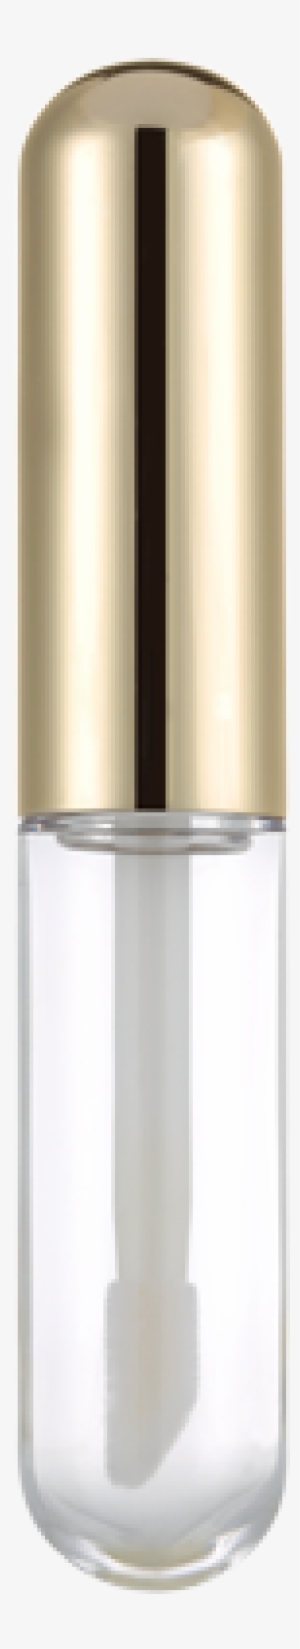 Dome Capsule Shape Lip Gloss Bottle - Empty Liquid Lipstick Tube Png